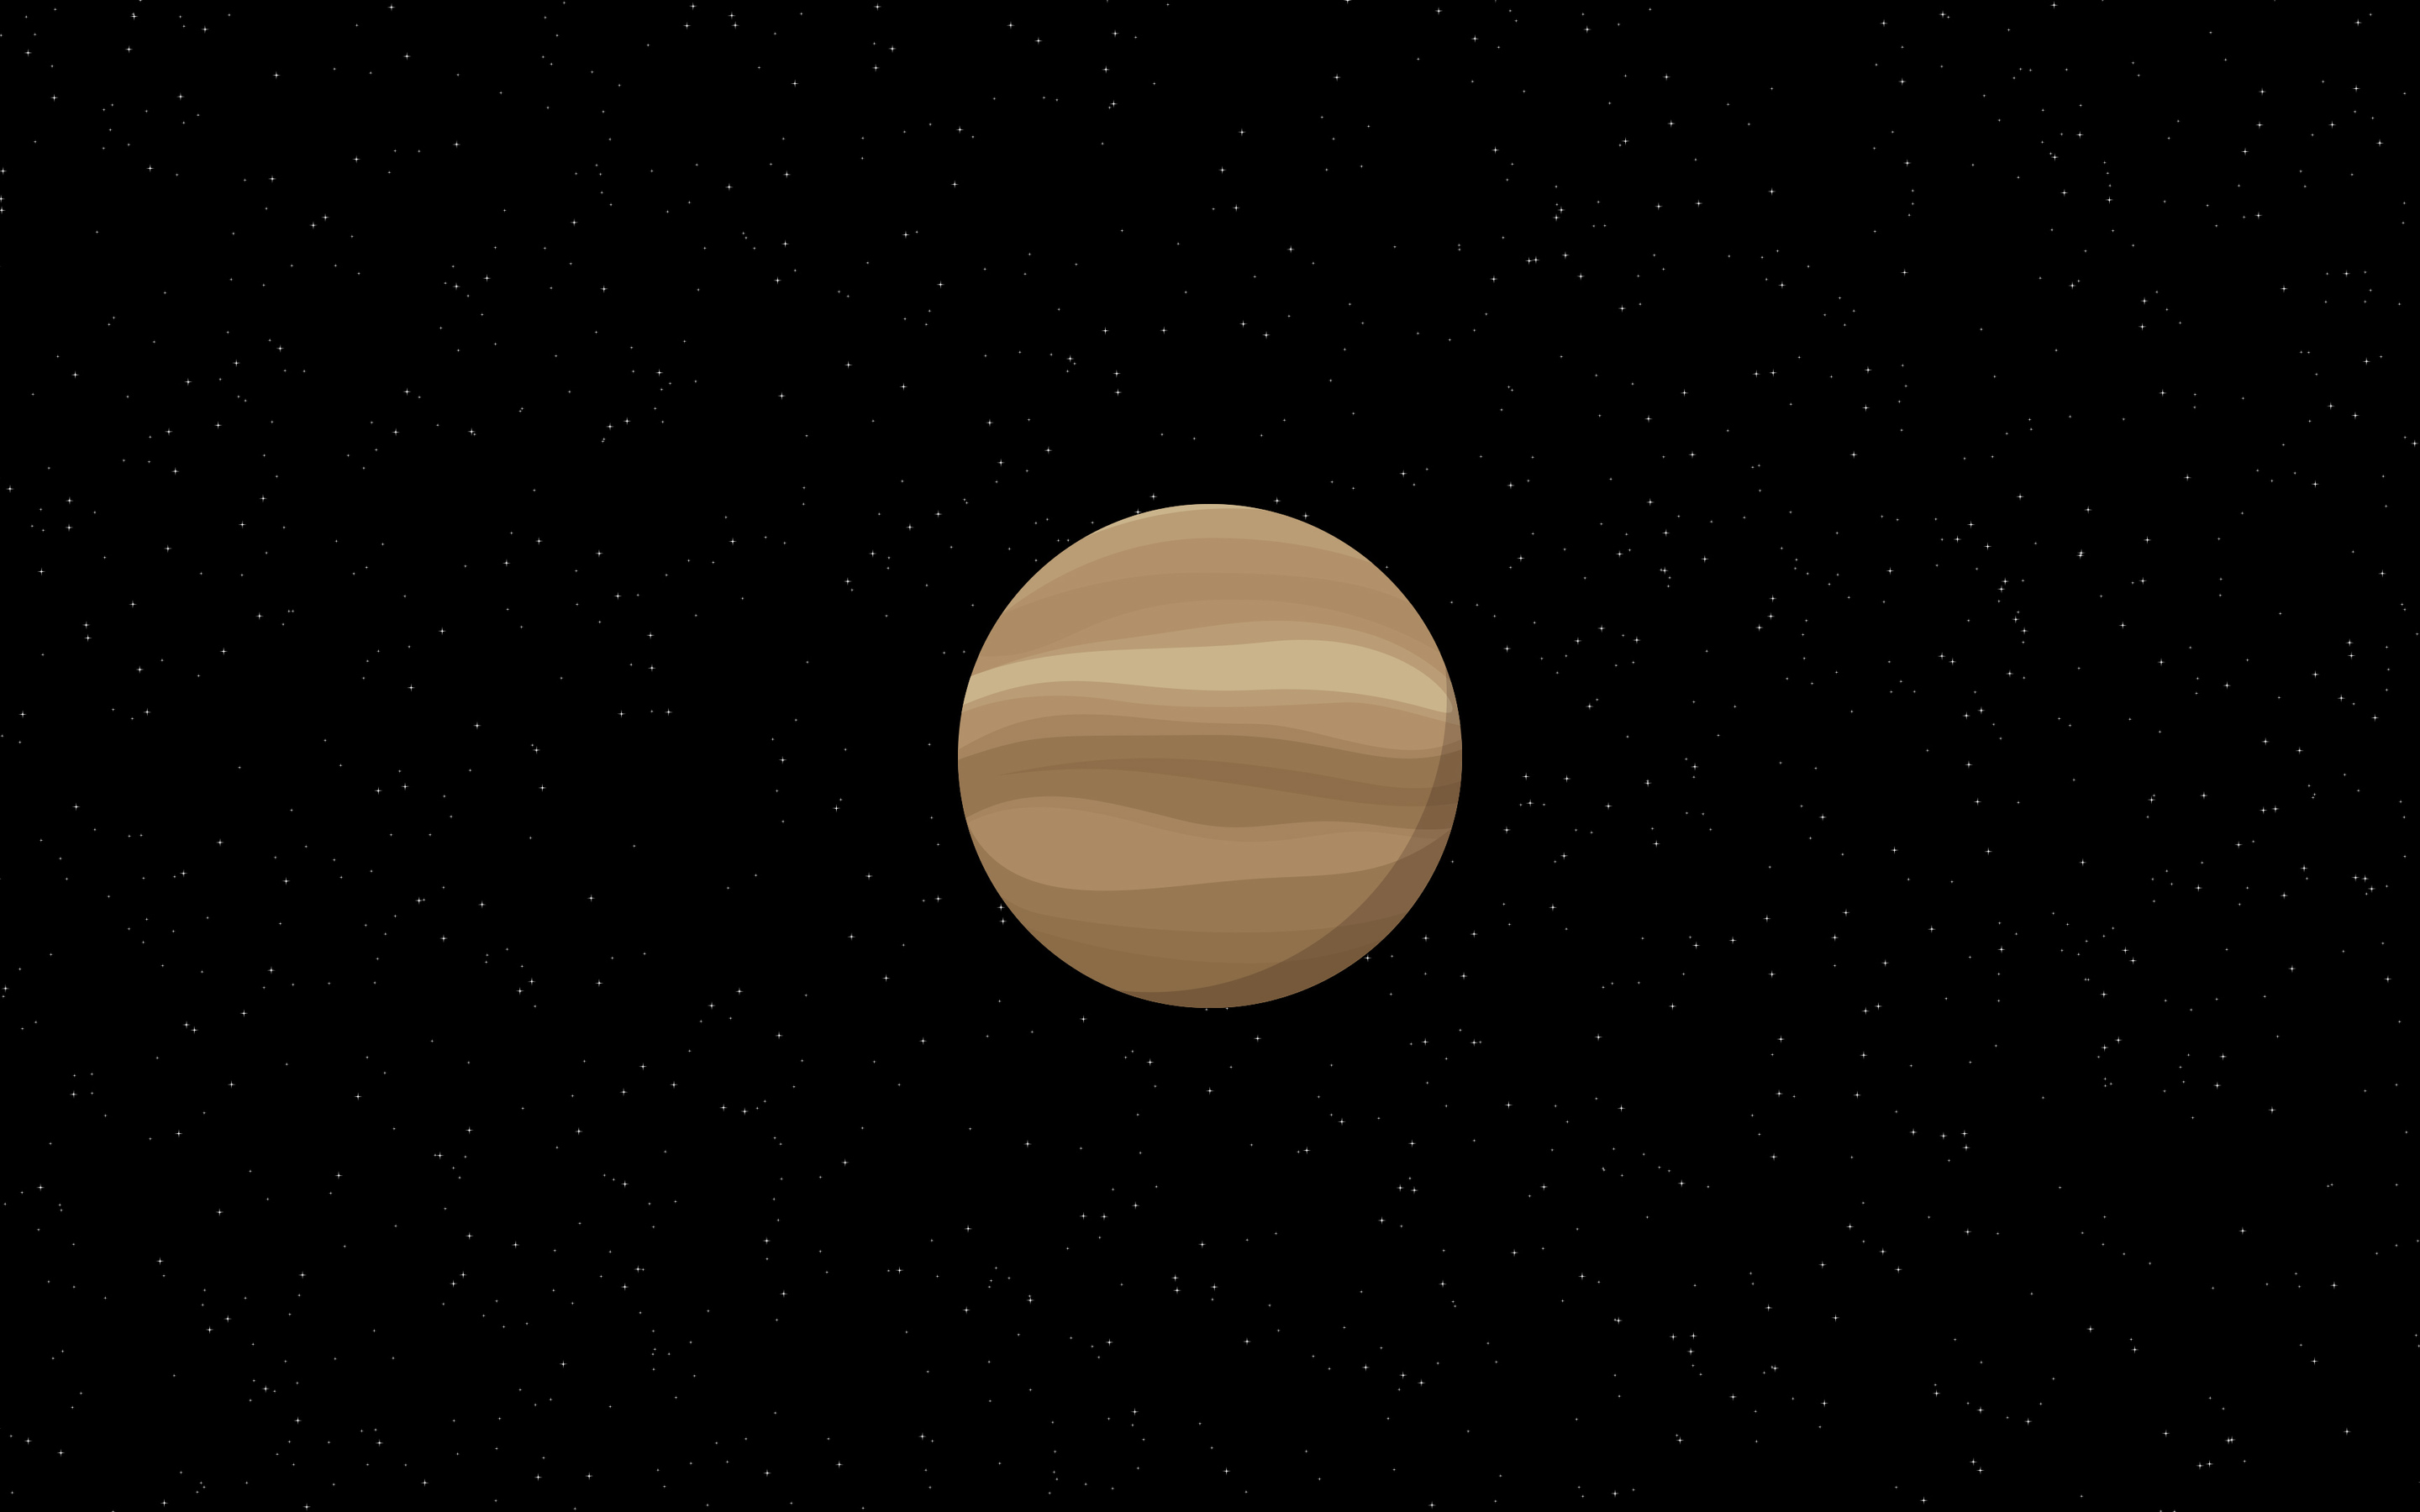 Venus 4K Wallpapers